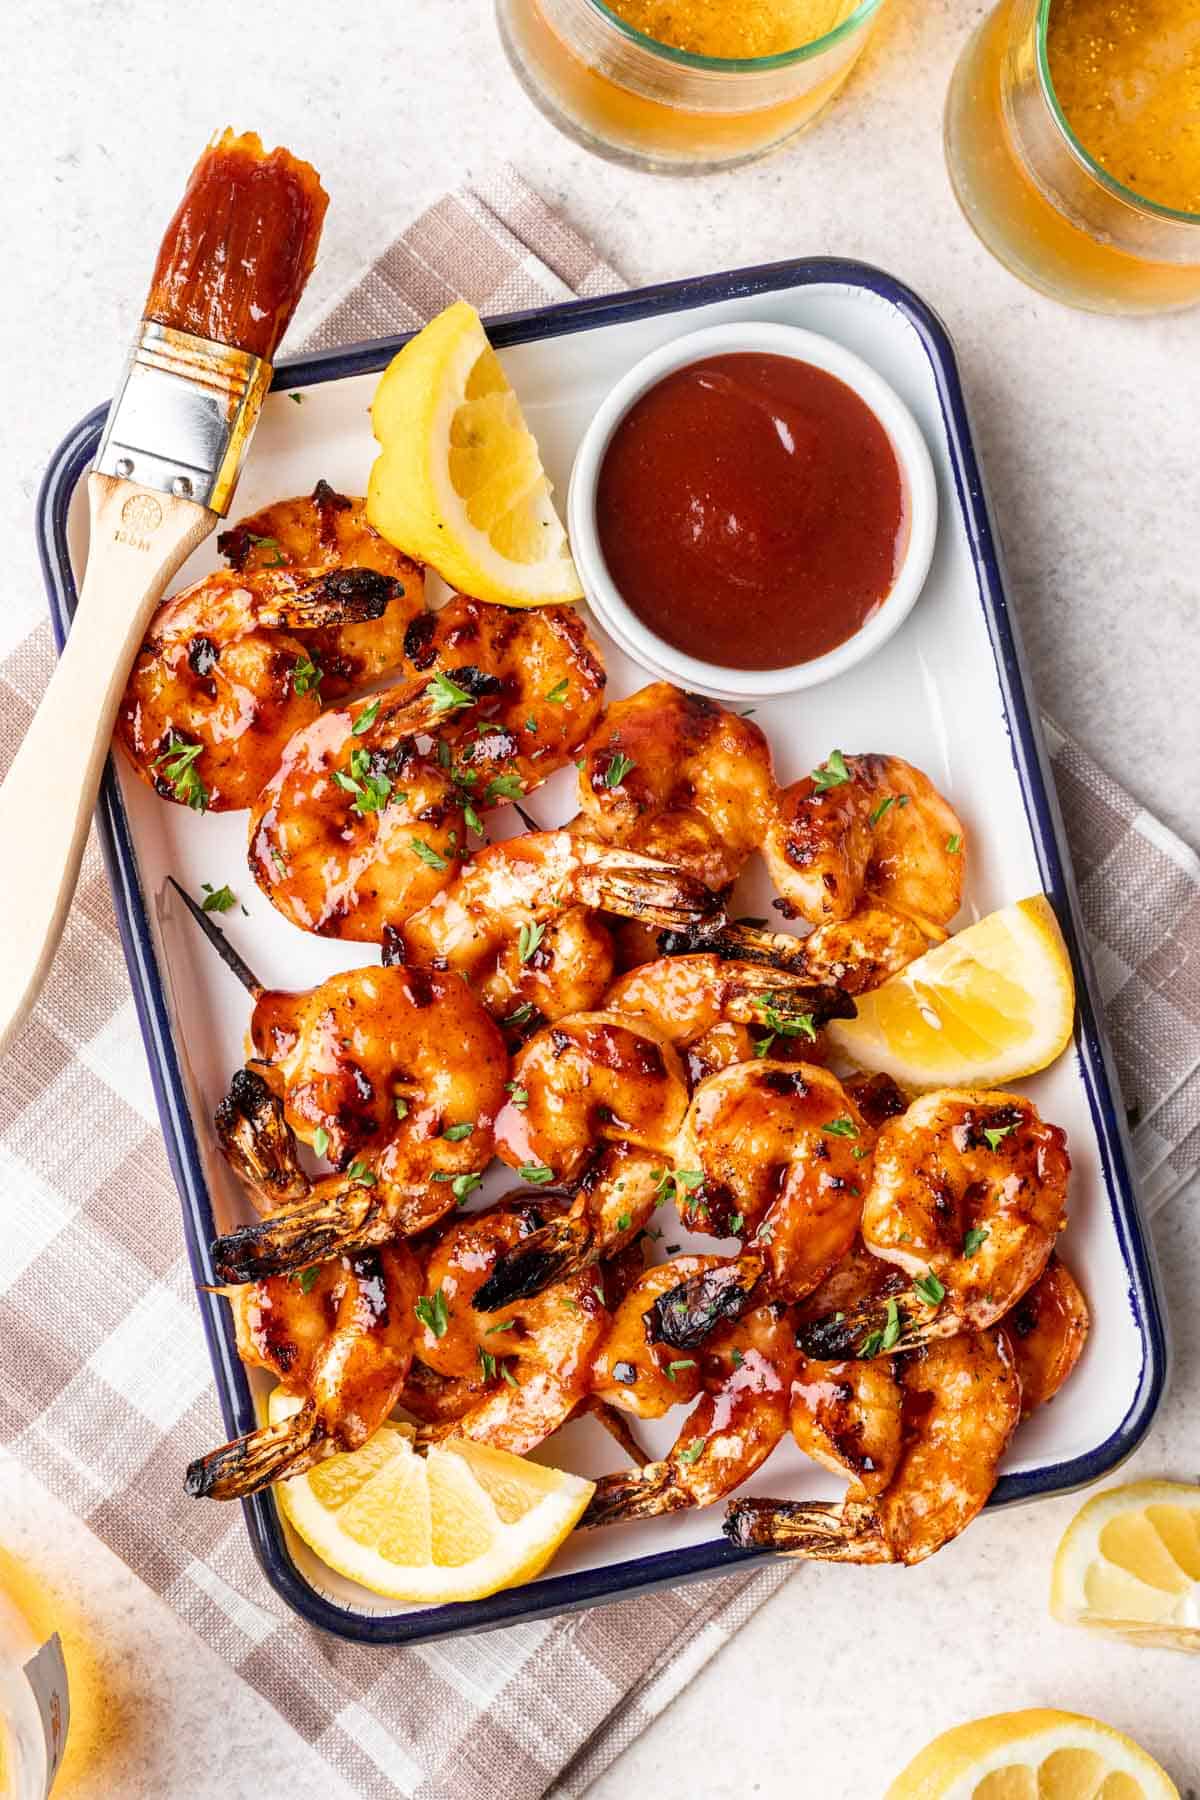 Grilled shrimp, brushed with BBQ sauce, on a serving platter.